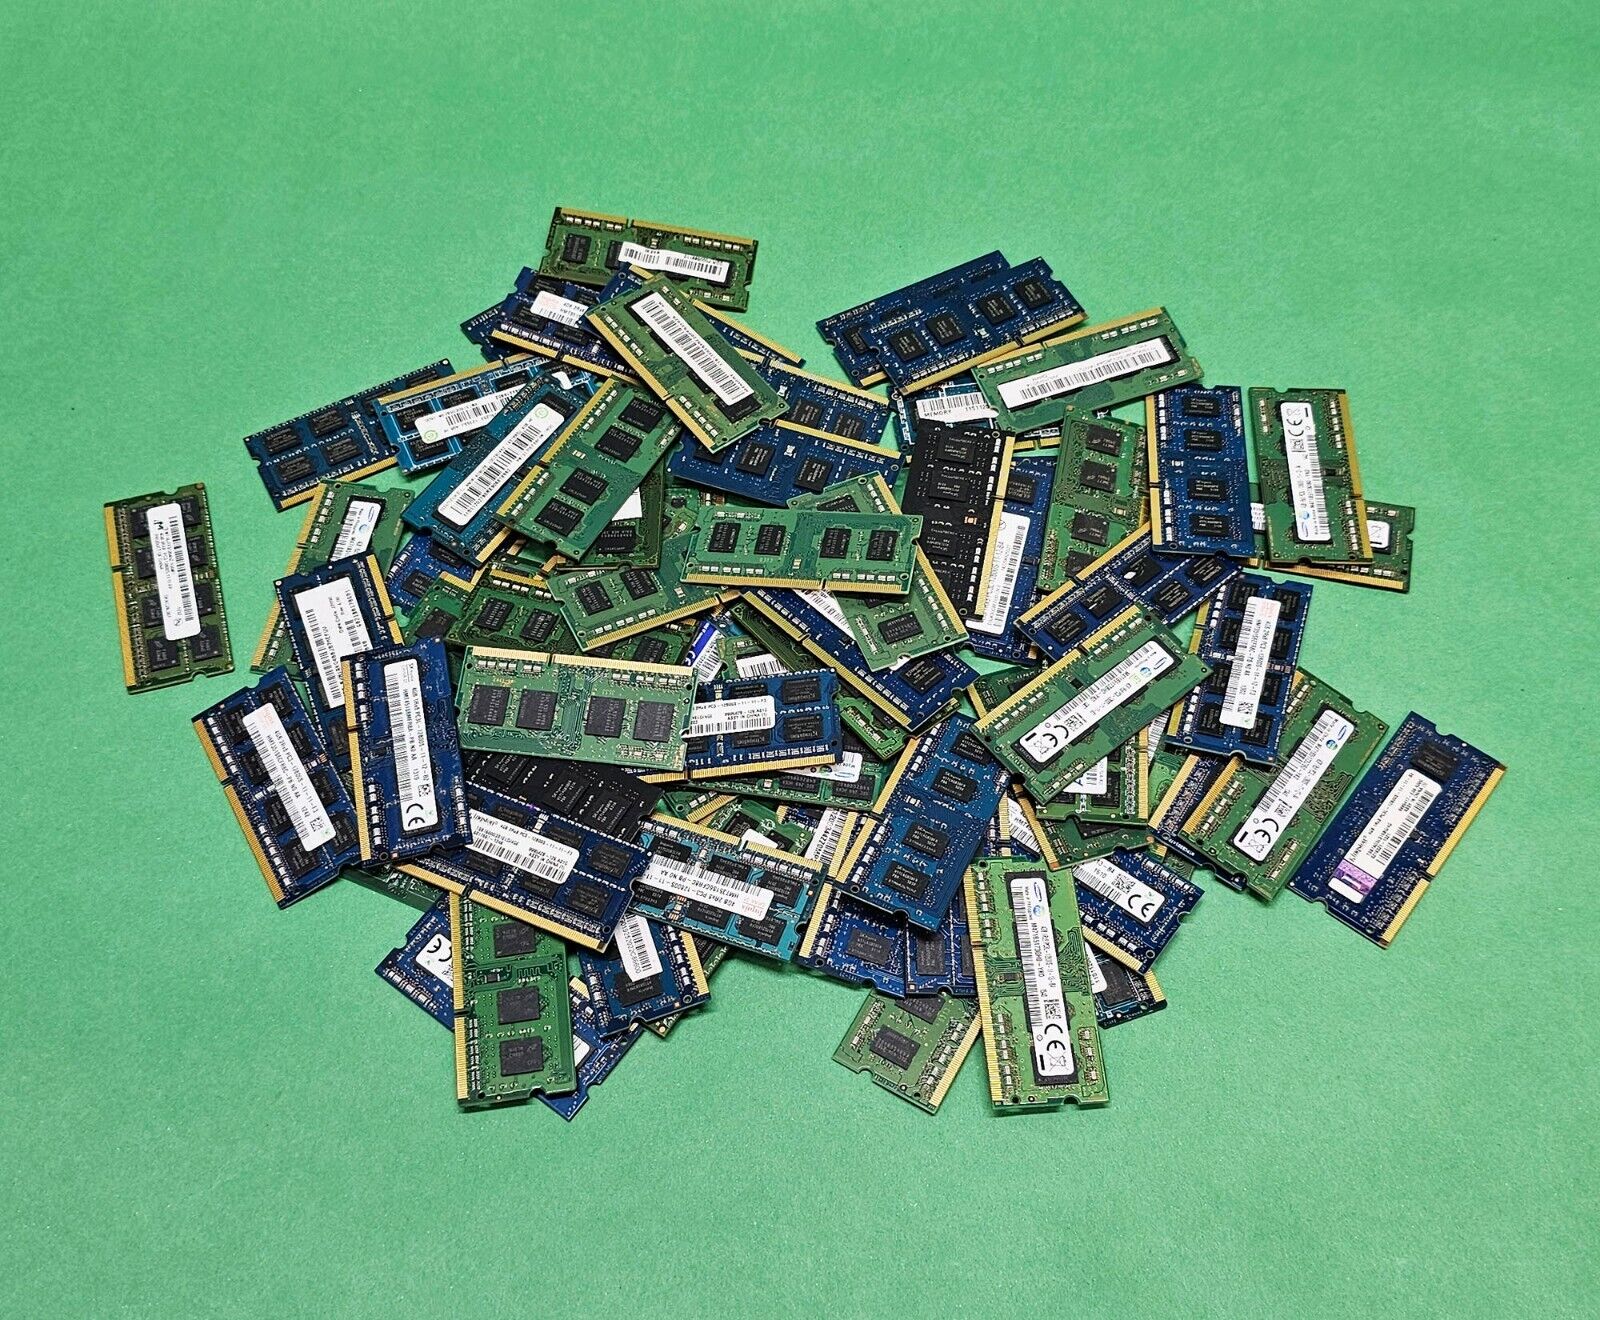 Mixed Lot of 75 PC 4GB DDR3 Laptop RAM Memory Modules